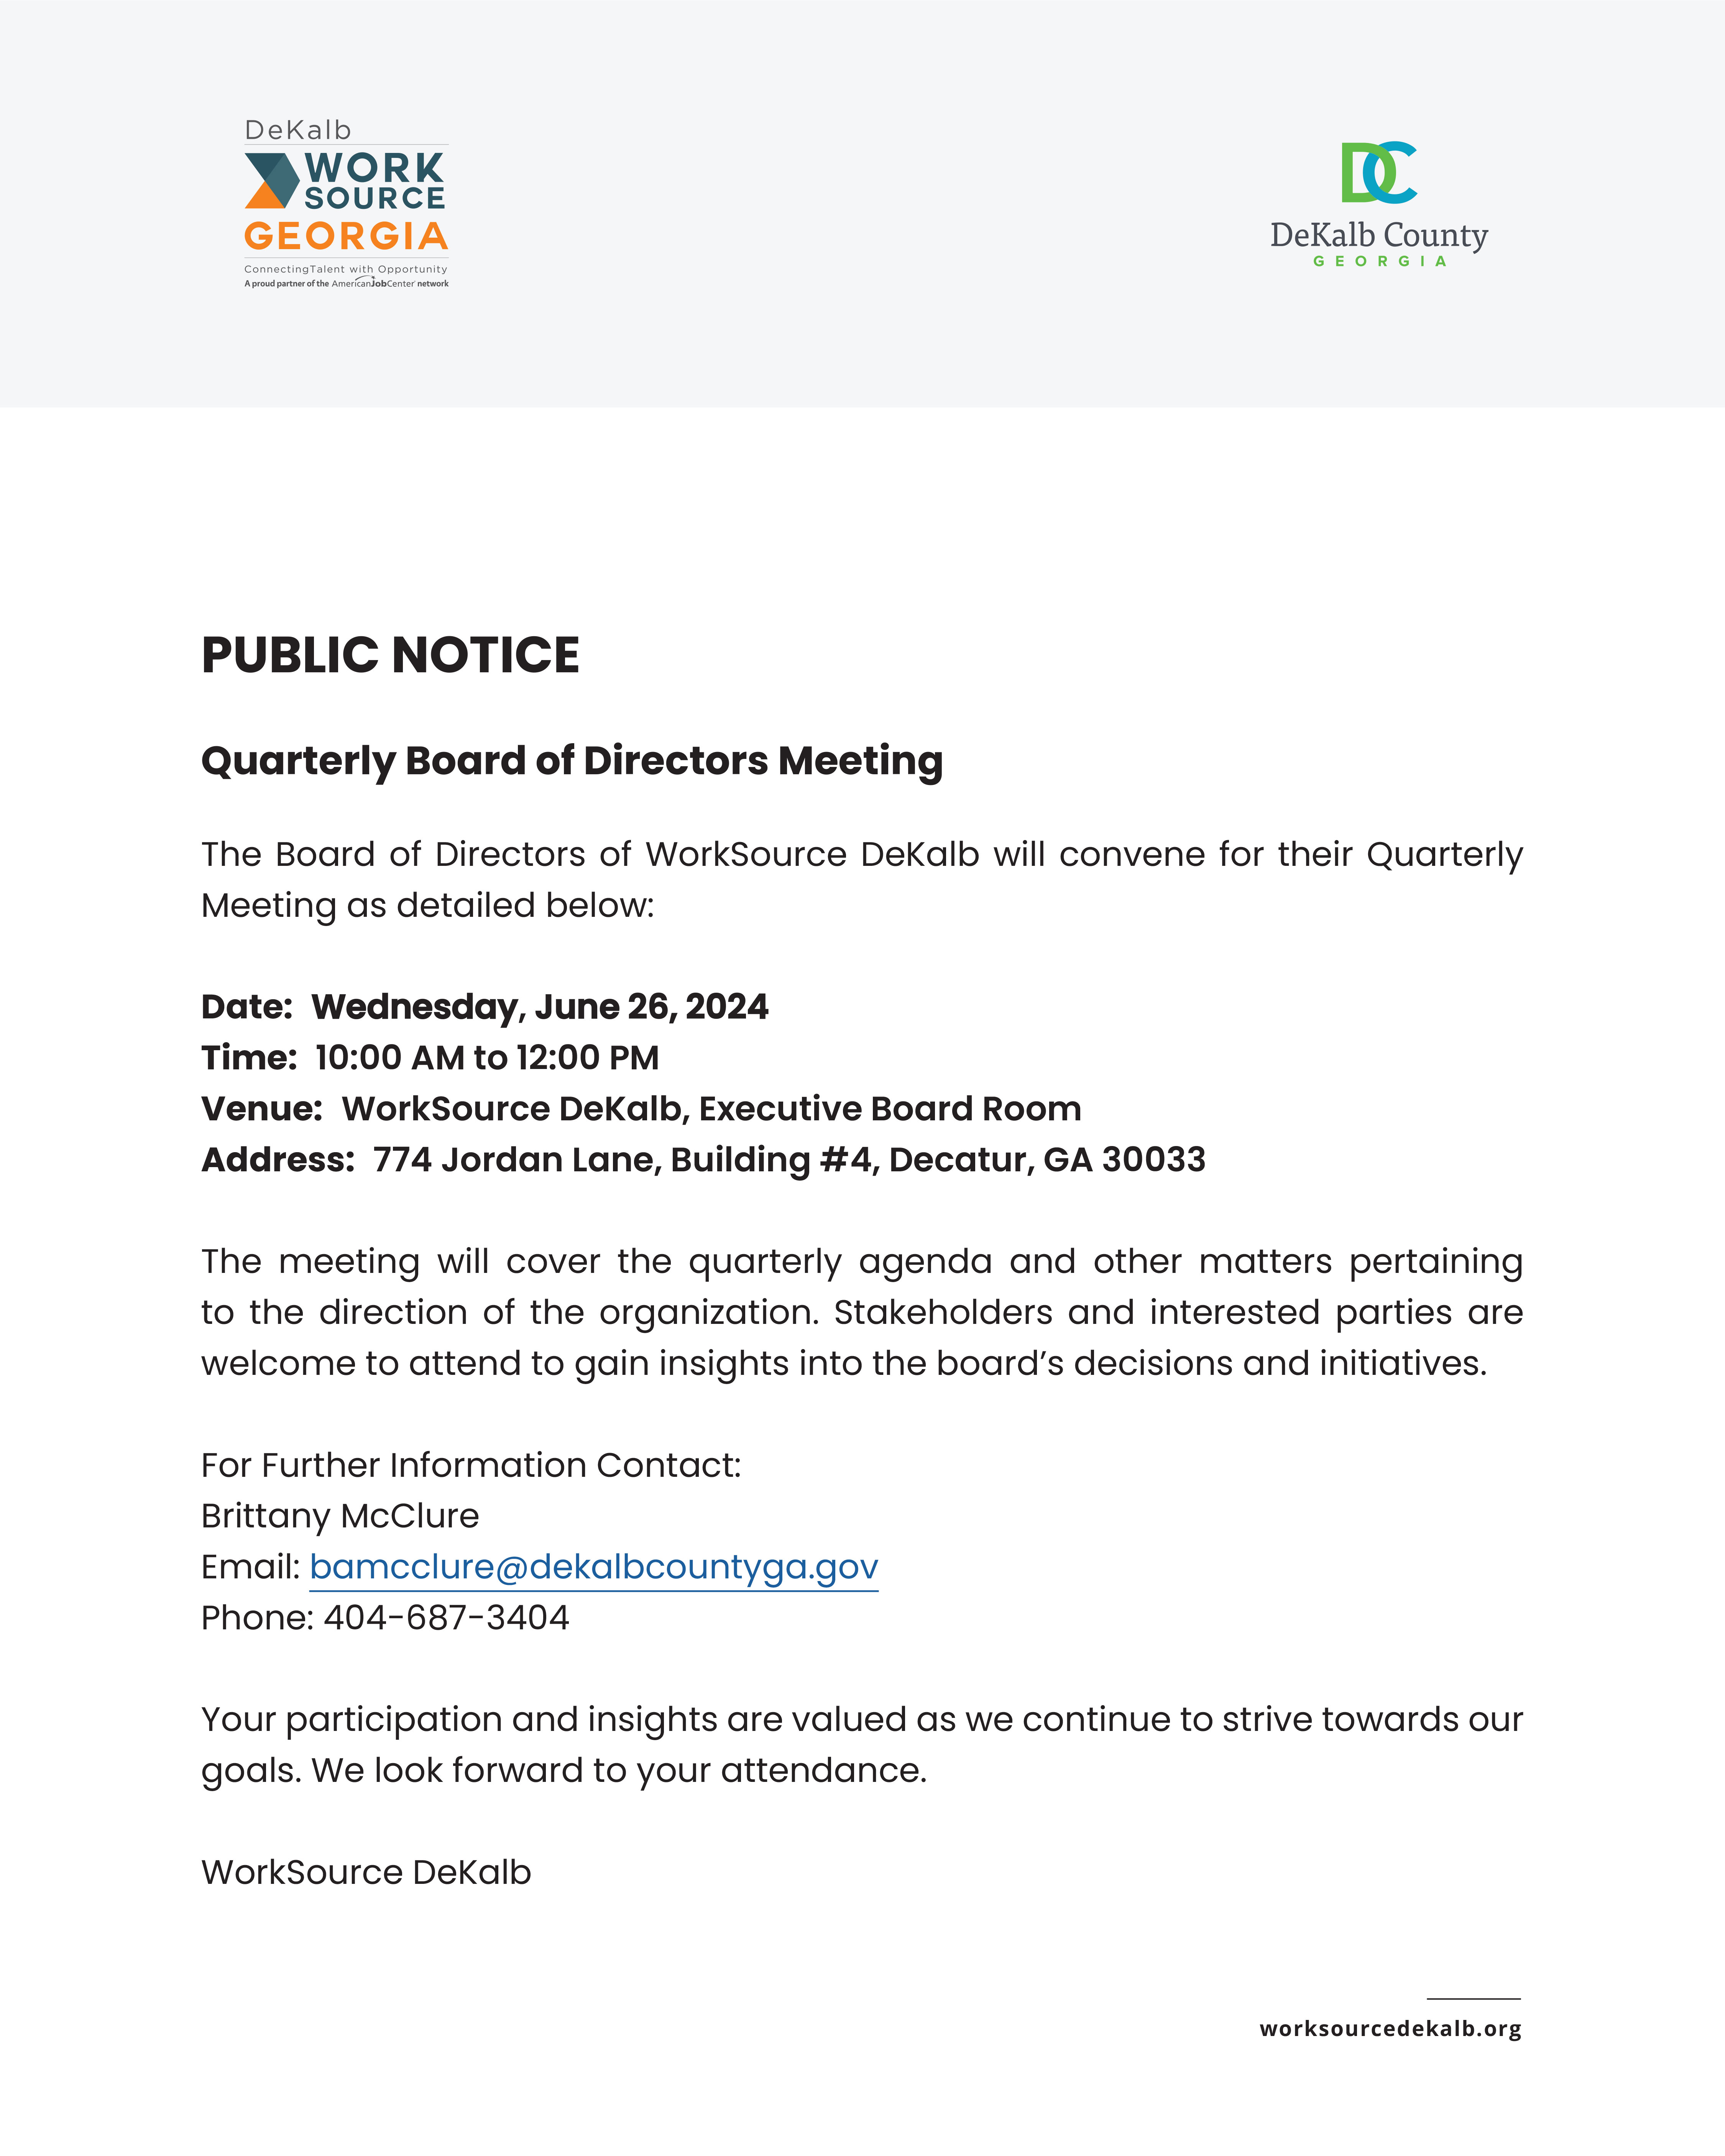 Public Notice of Board Meeting